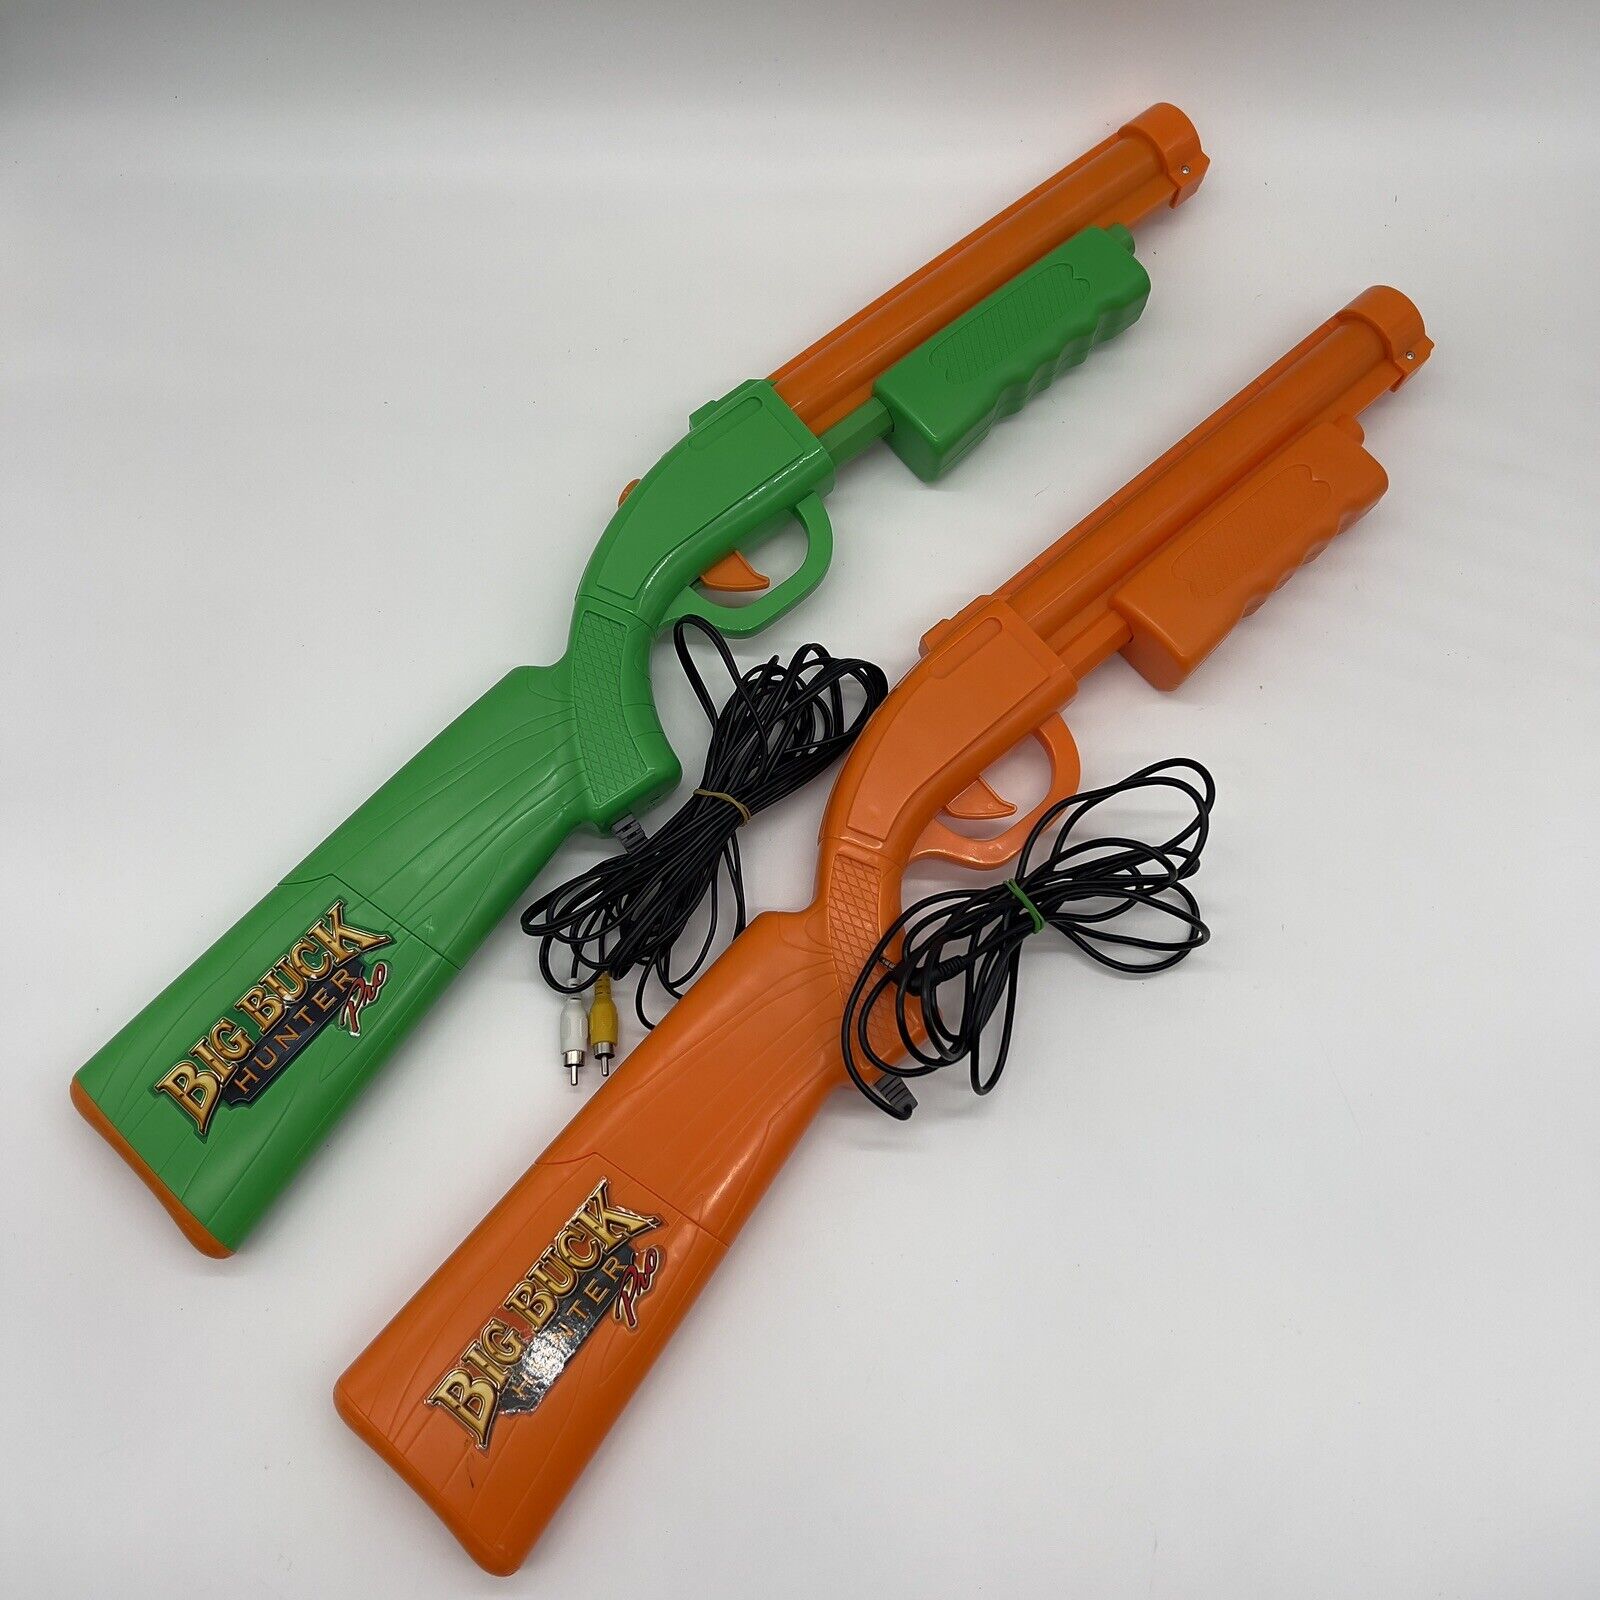 Big Buck Hunter Pro Arcade Game Green & Orange Guns Only - NO SENSOR